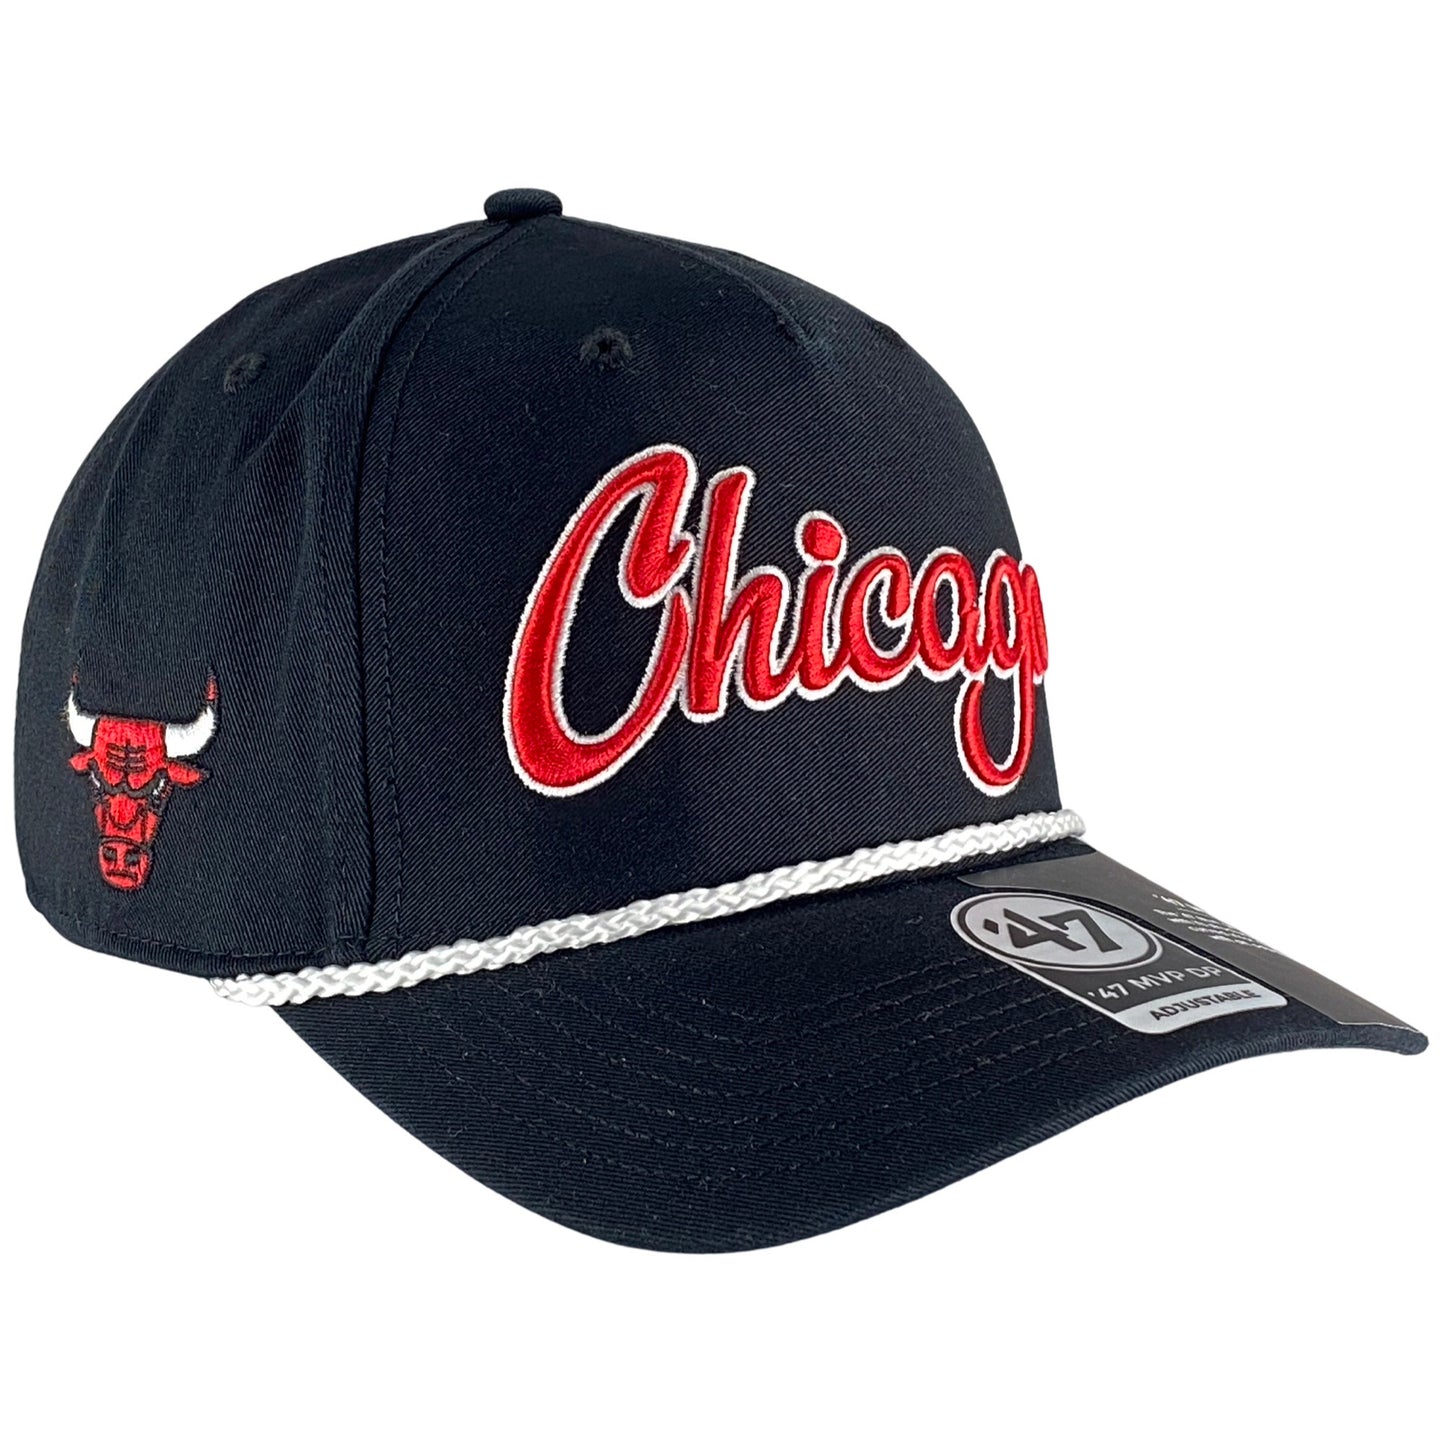 Chicago Bulls Black Overhand Rope Script Snapback Hat